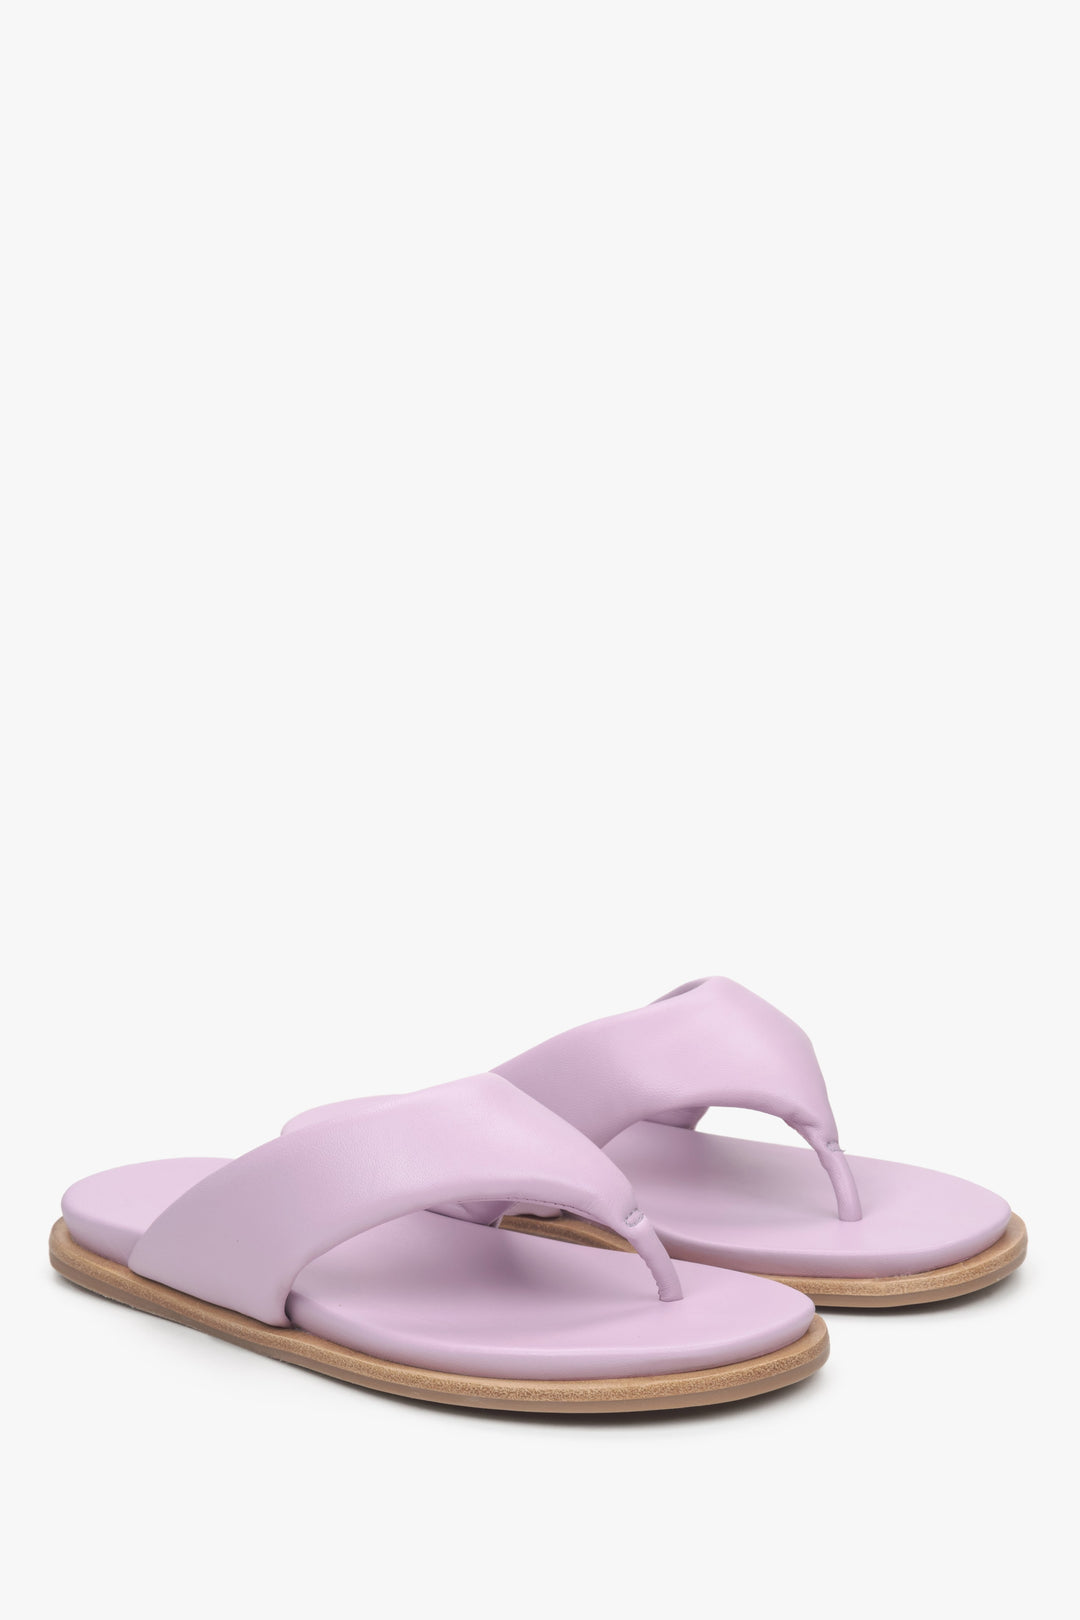 Women's lilac slide sandals.